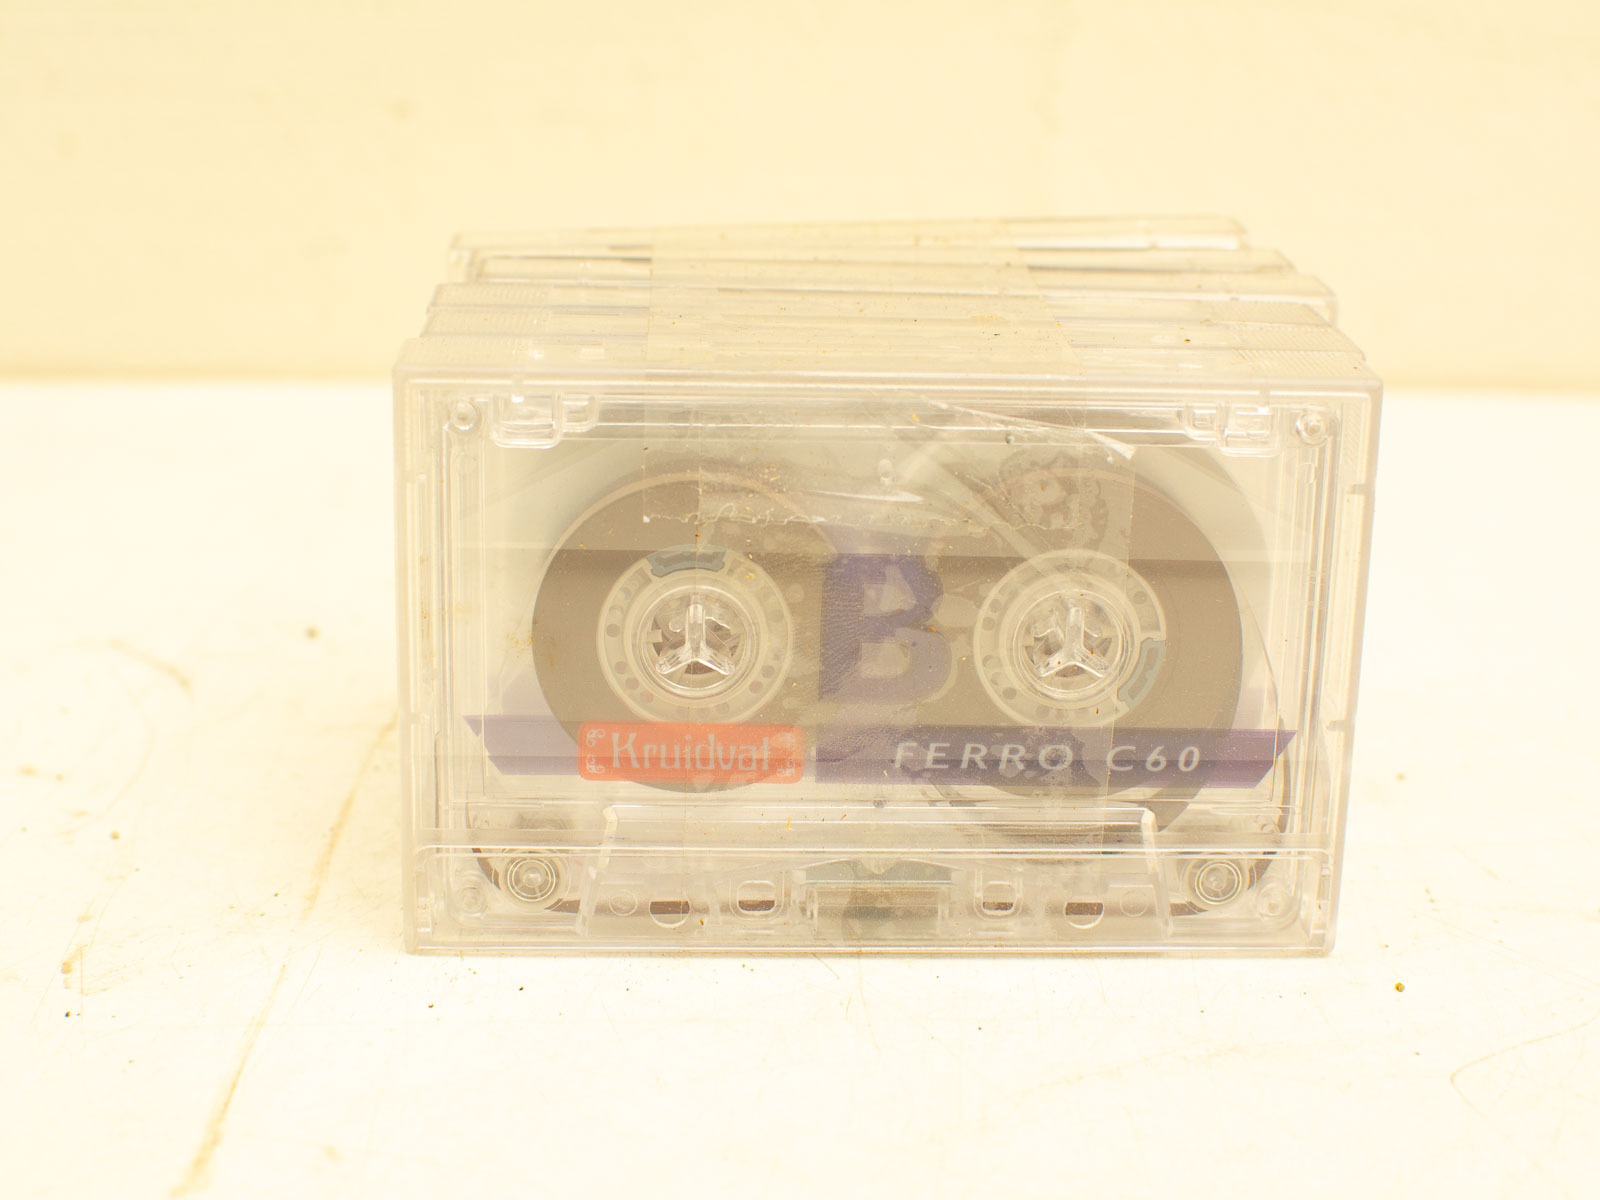 6 cassettebandjes  31941